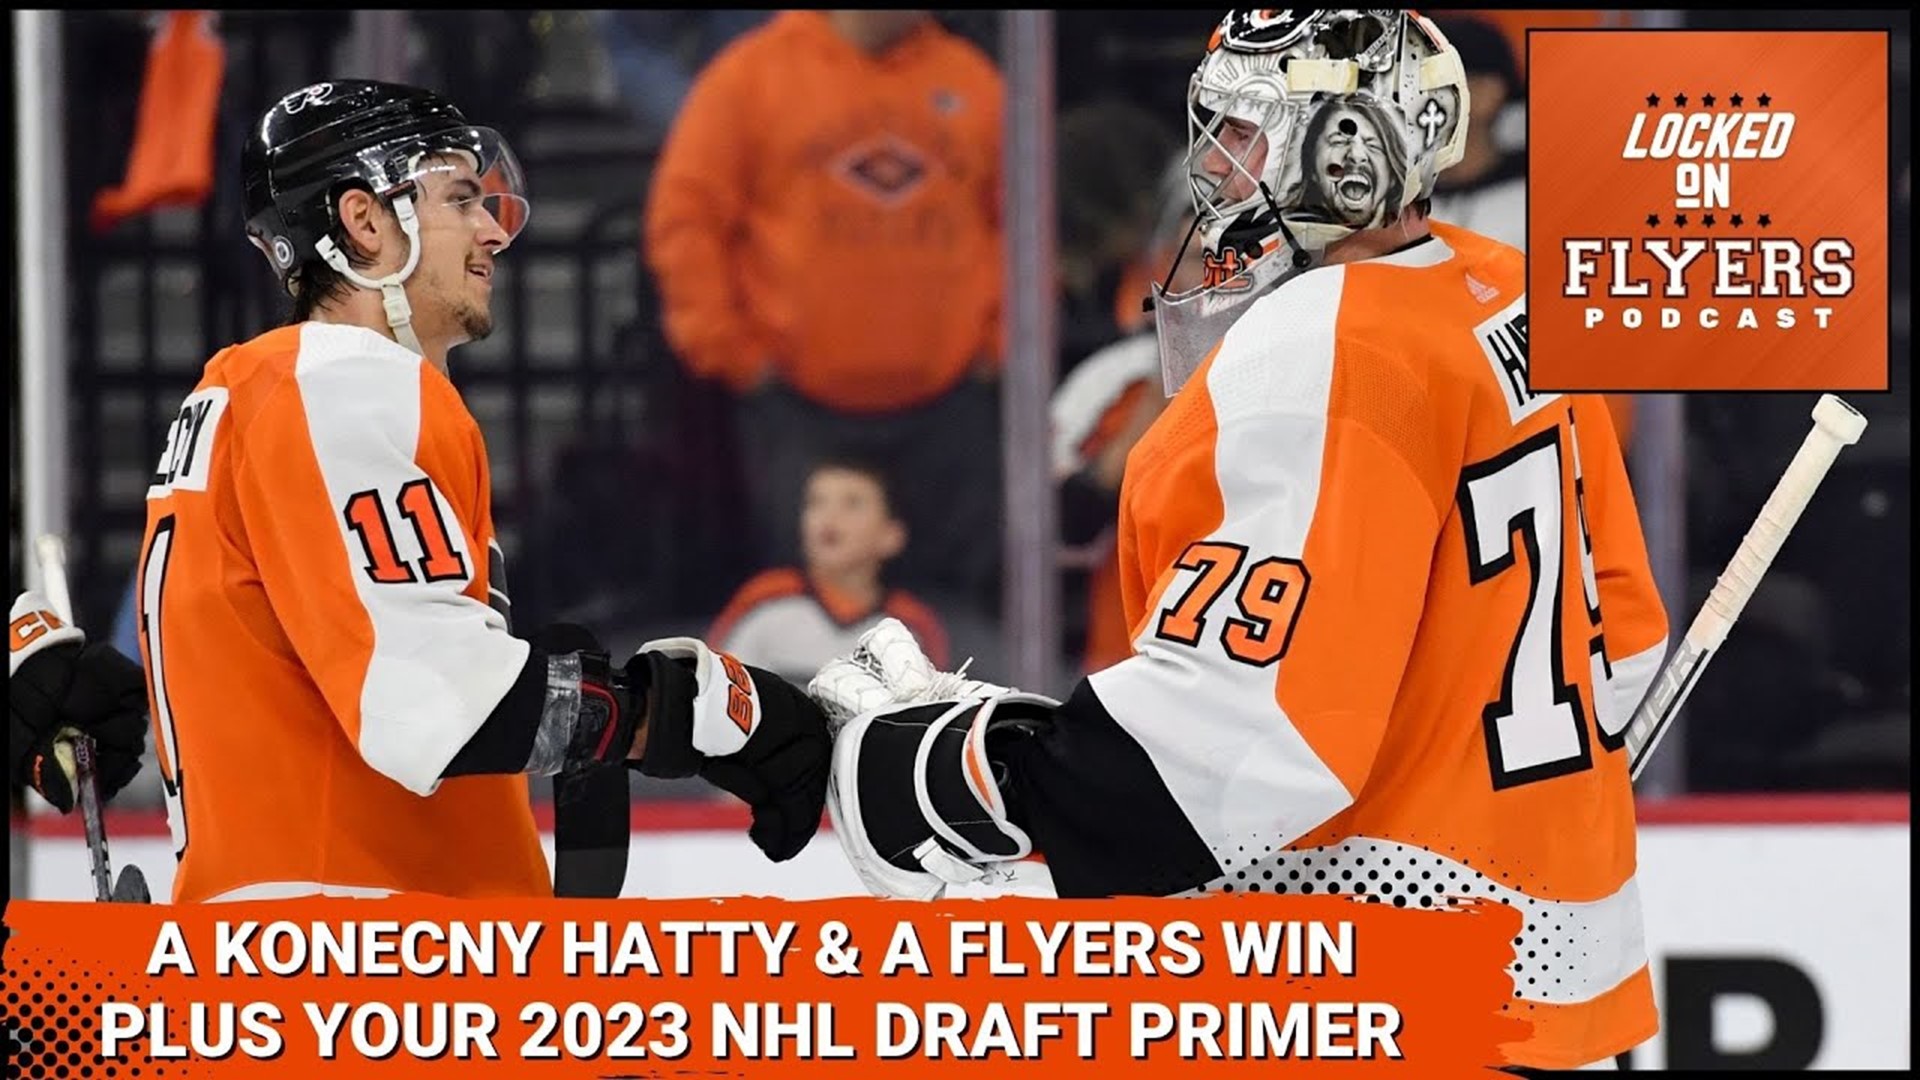 Konecny's hat trick leads surging Flyers past Capitals